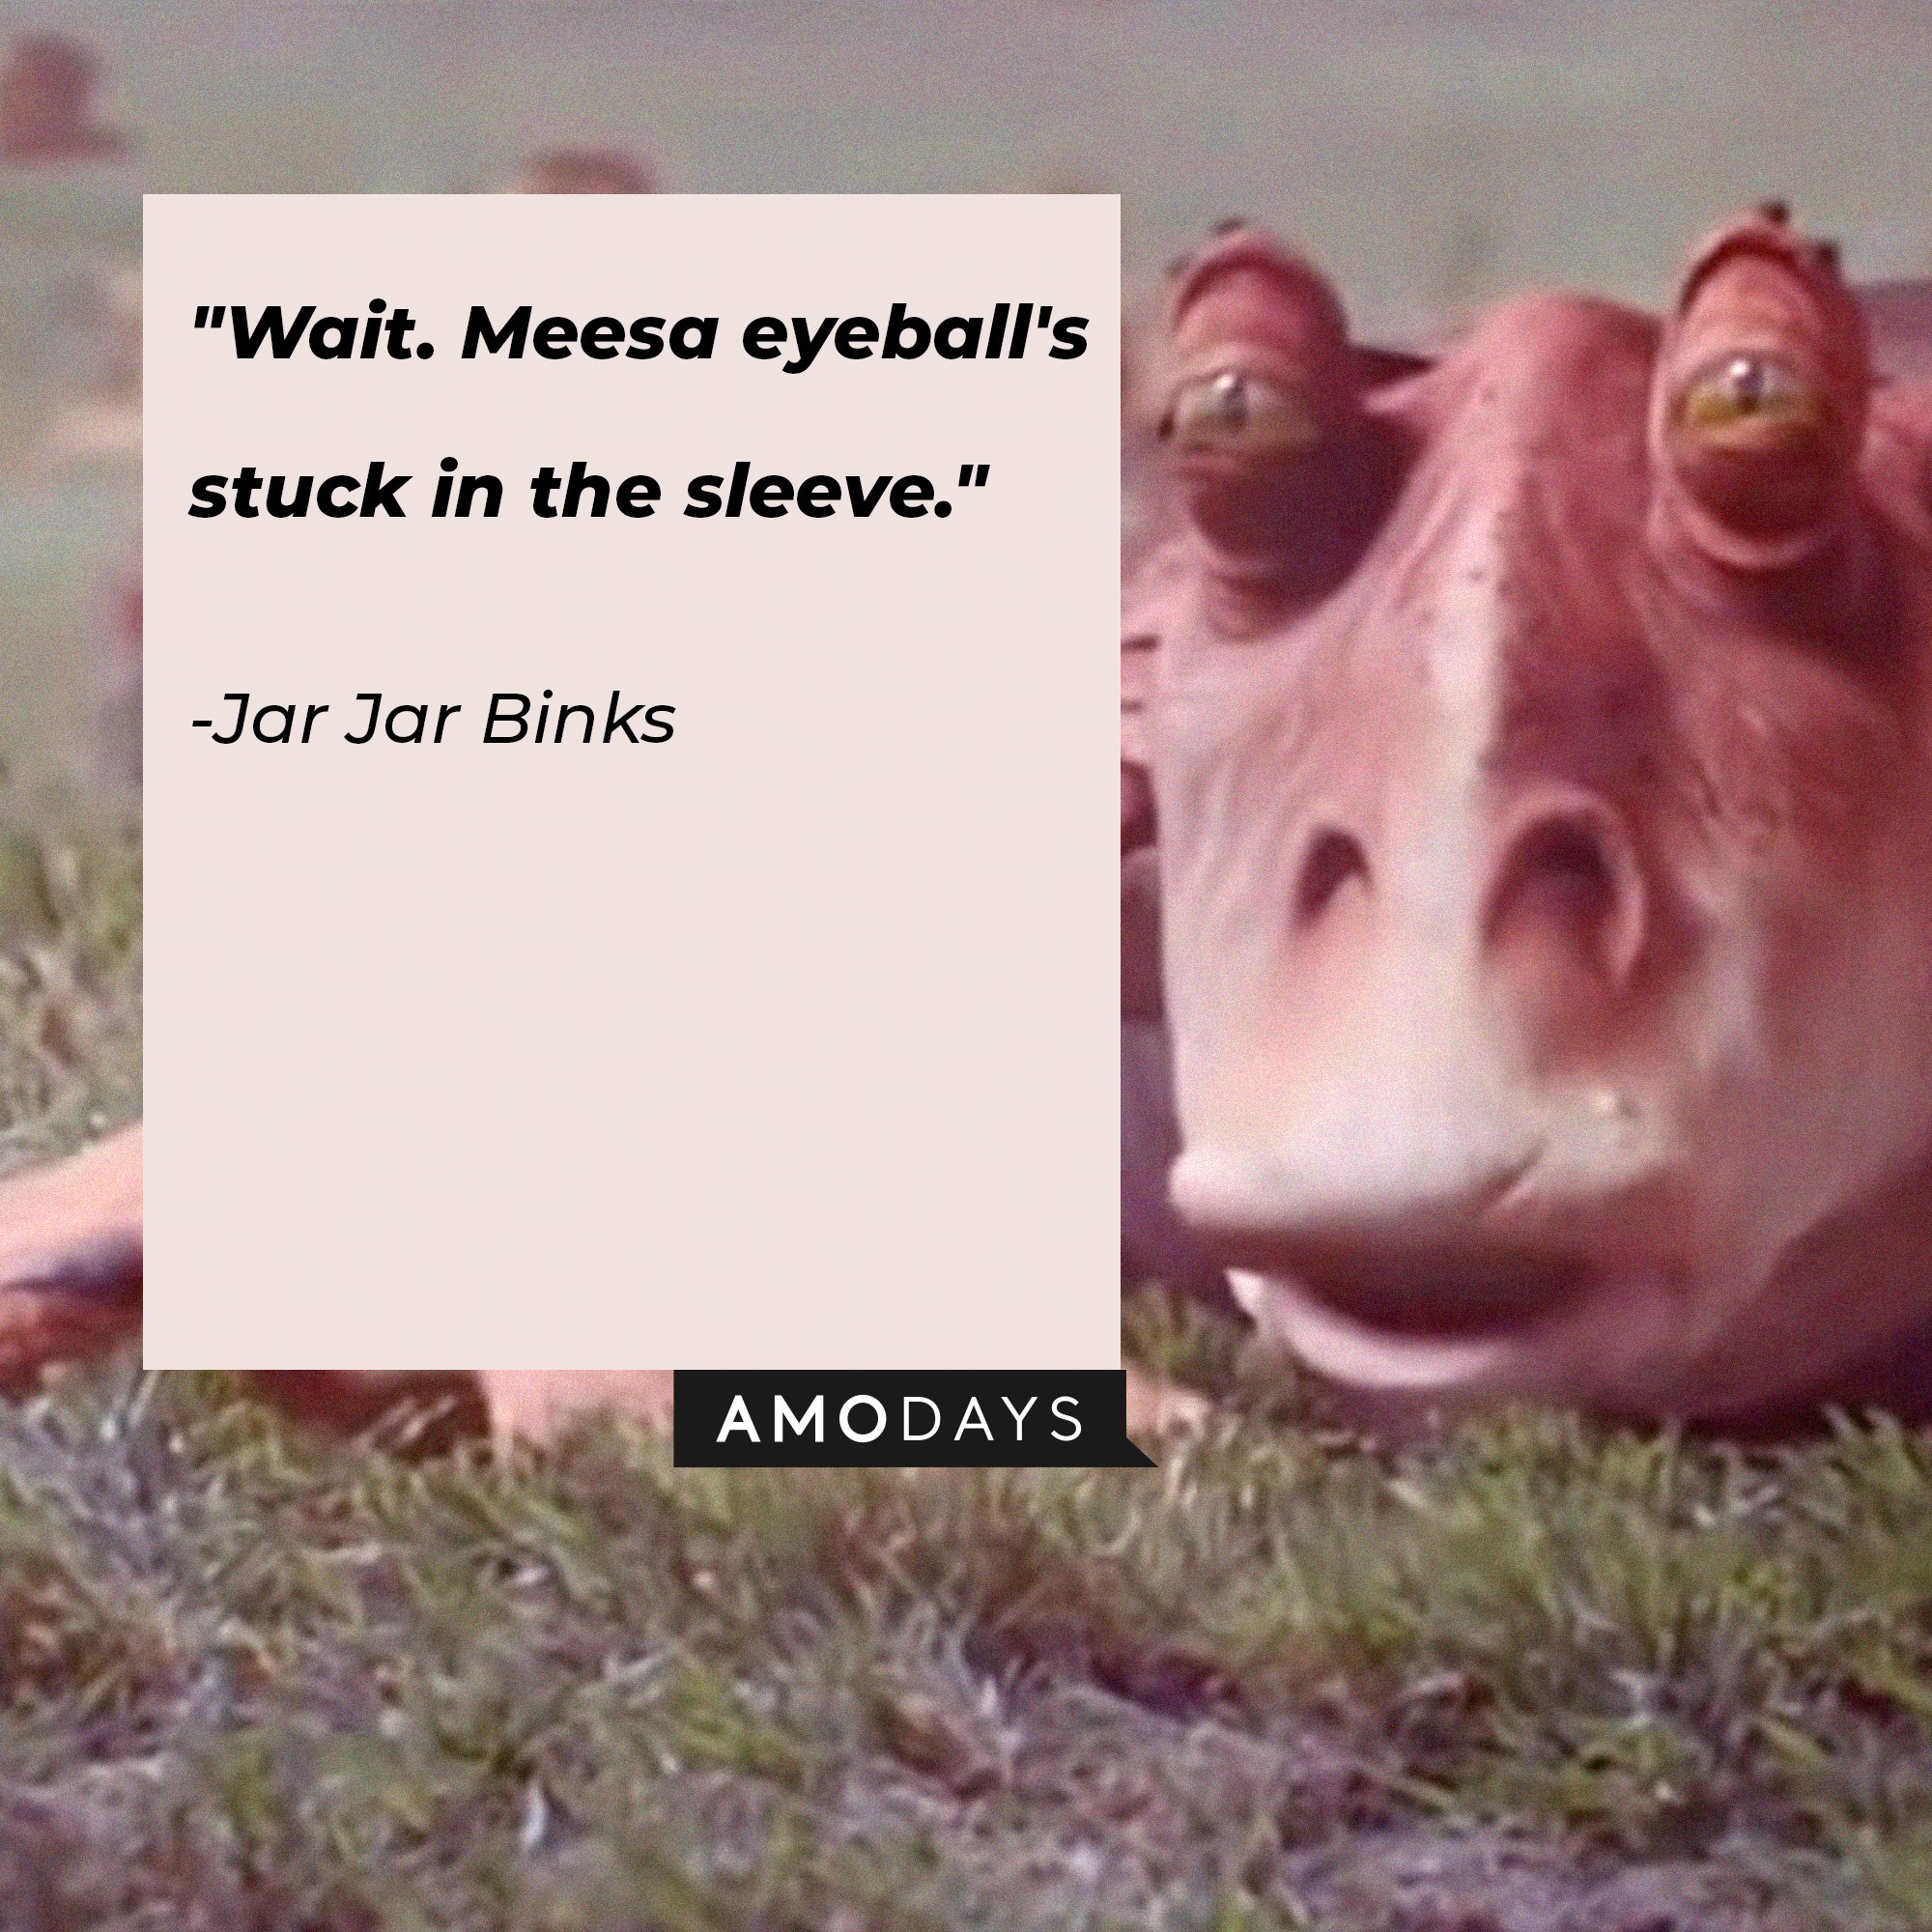  Jar Jar Binks’ quote: "Wait. Meesa eyeball's stuck in the sleeve." | Image: AmoDays